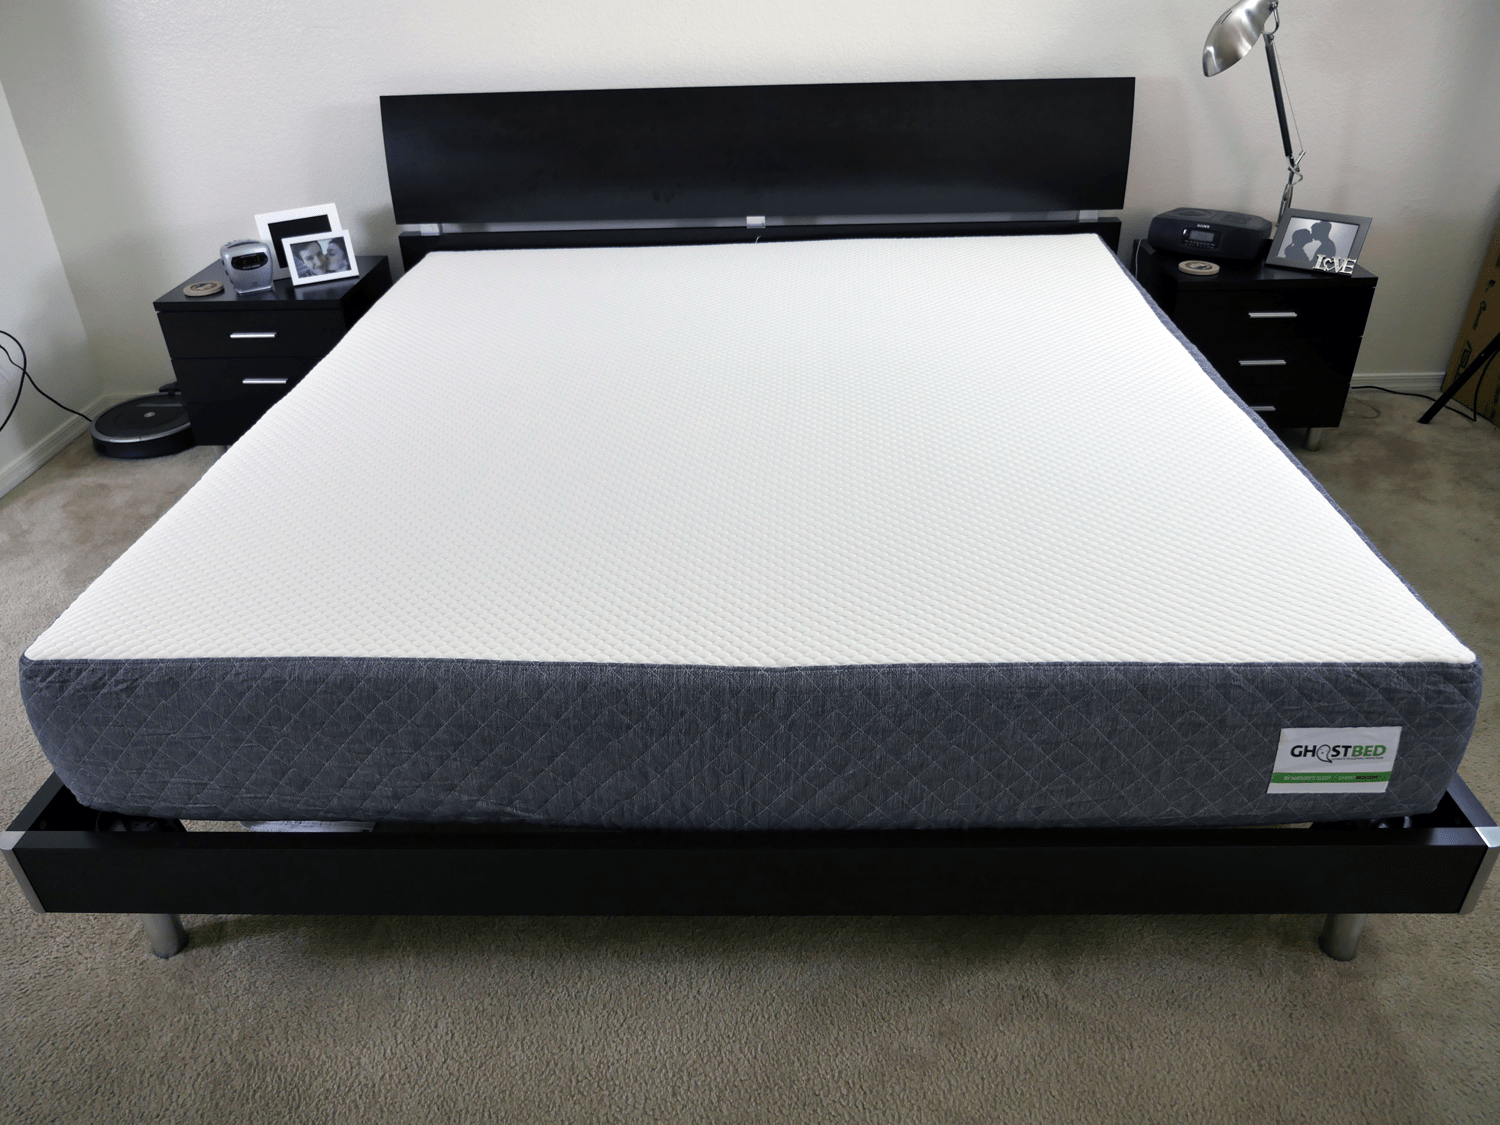 ghostbed hybrid 12 mattress